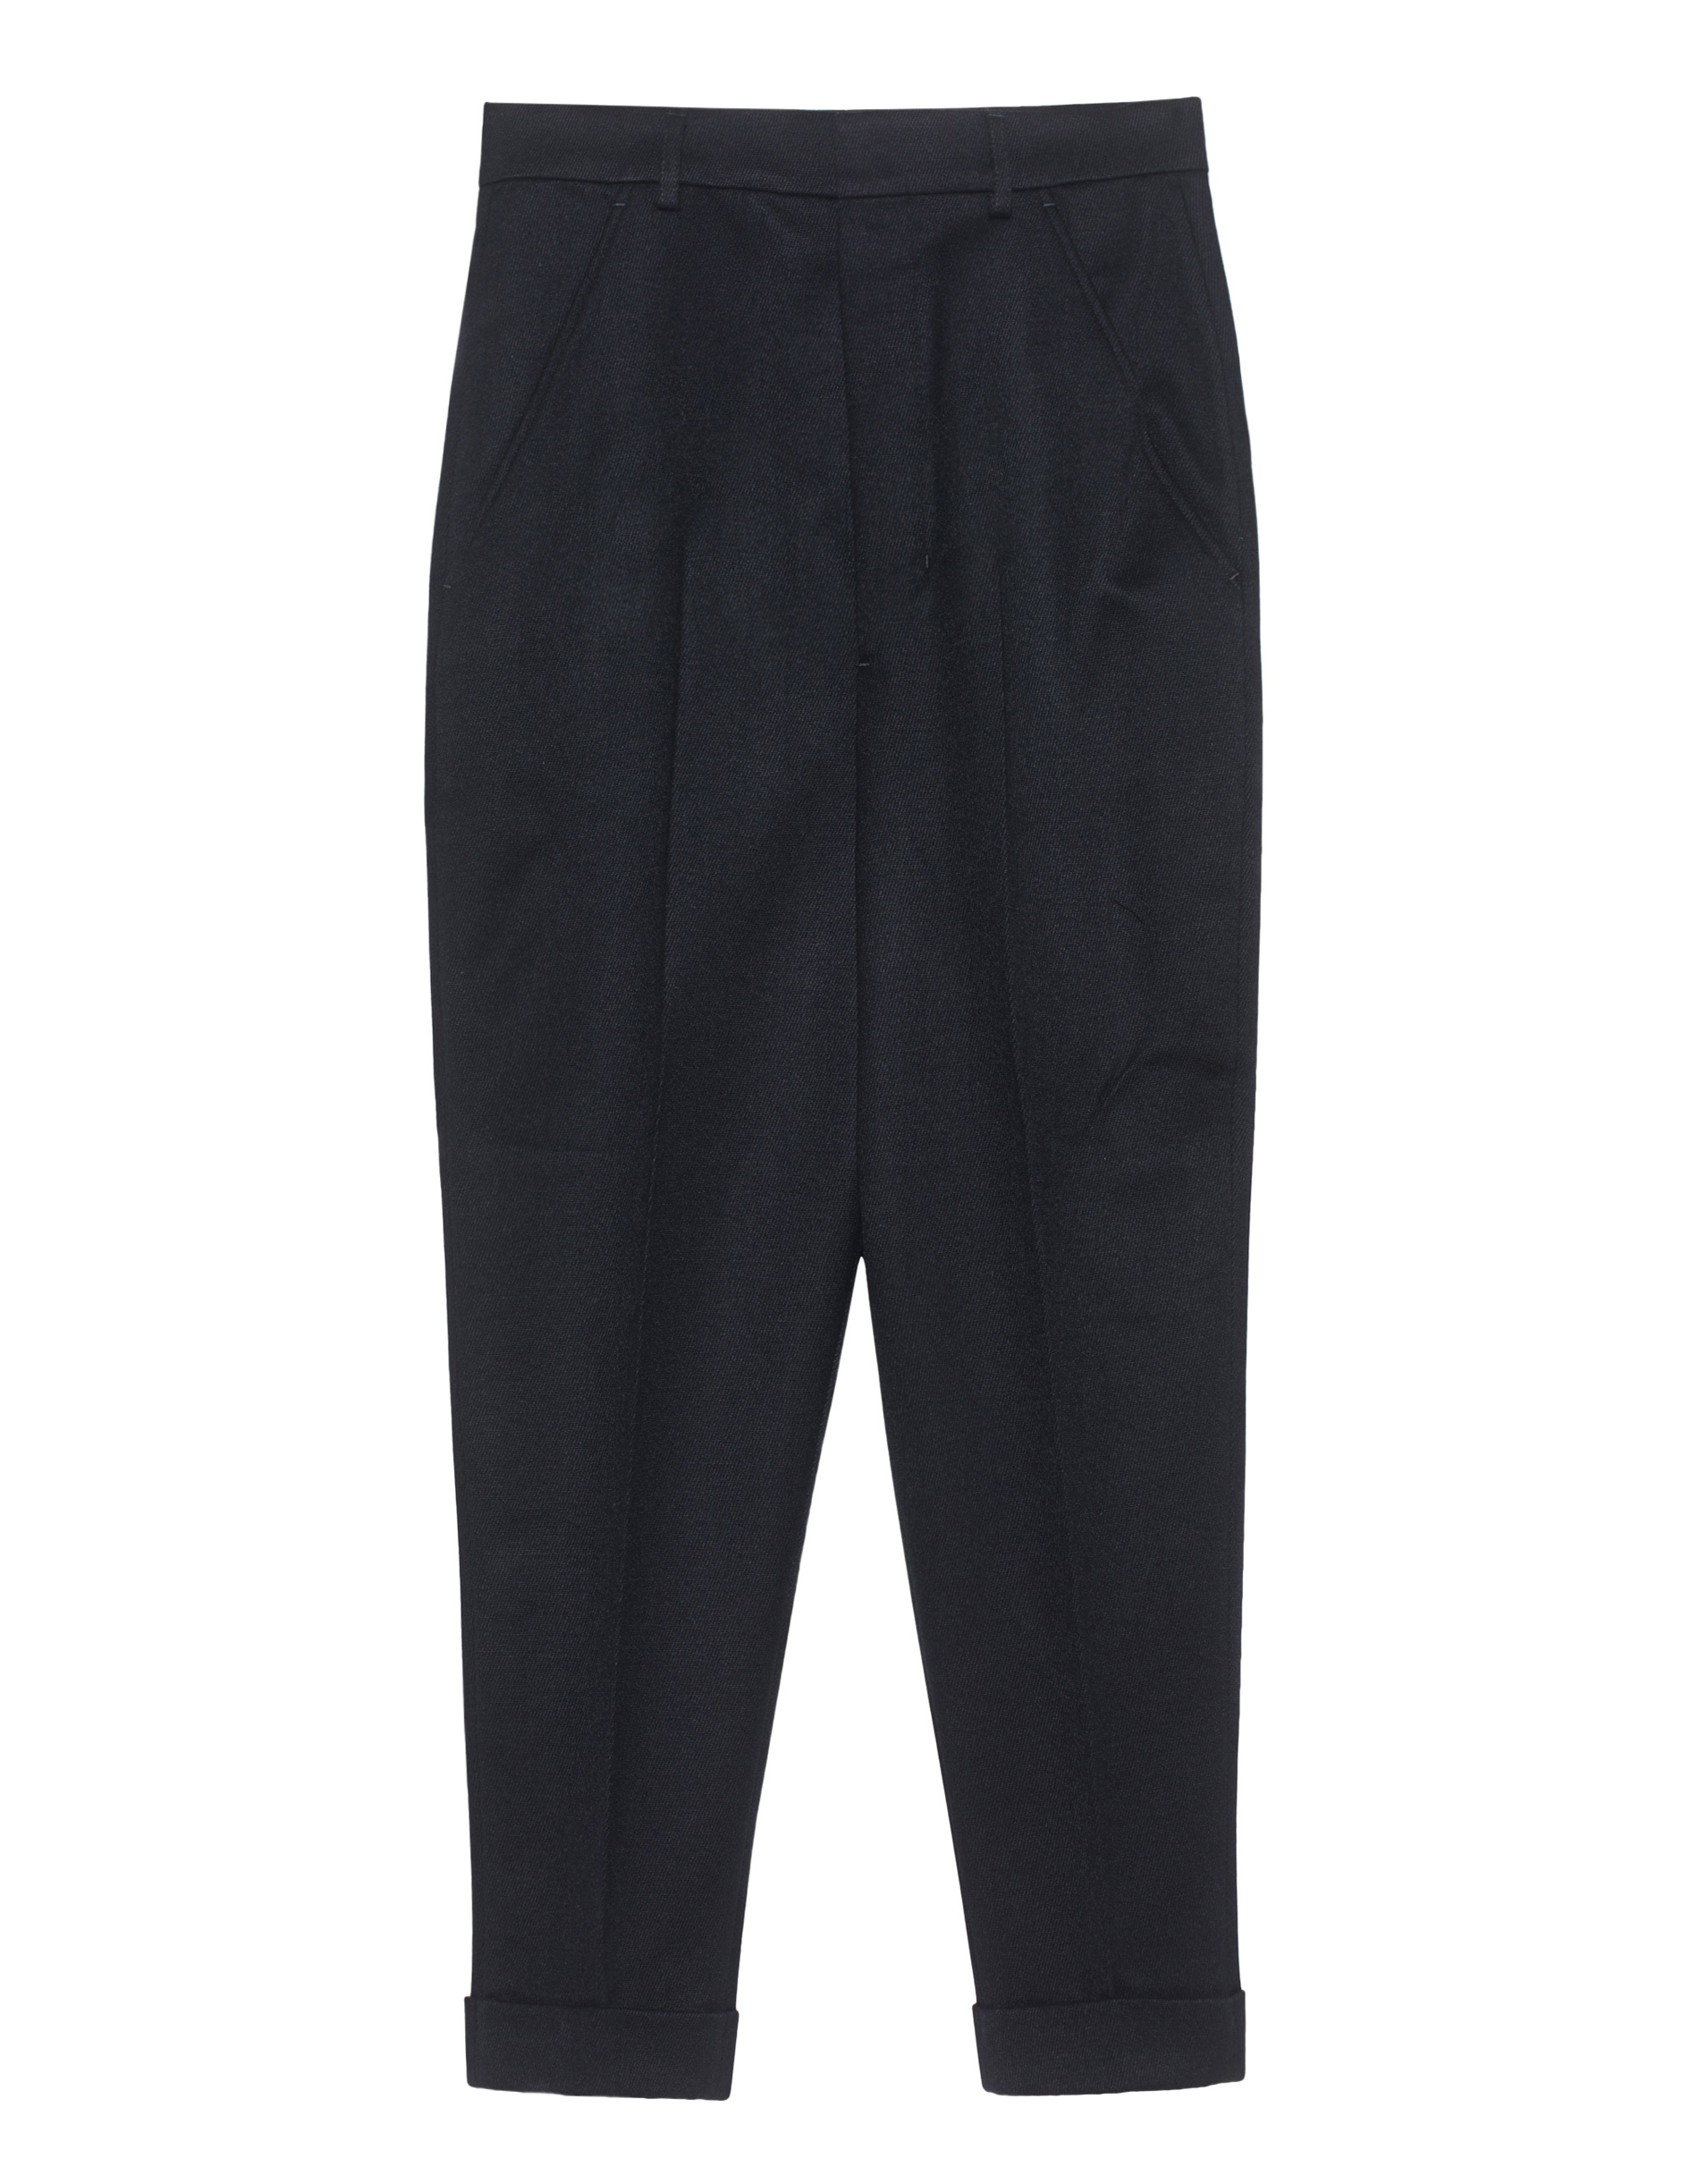 Black Ami Paris trousers AW16